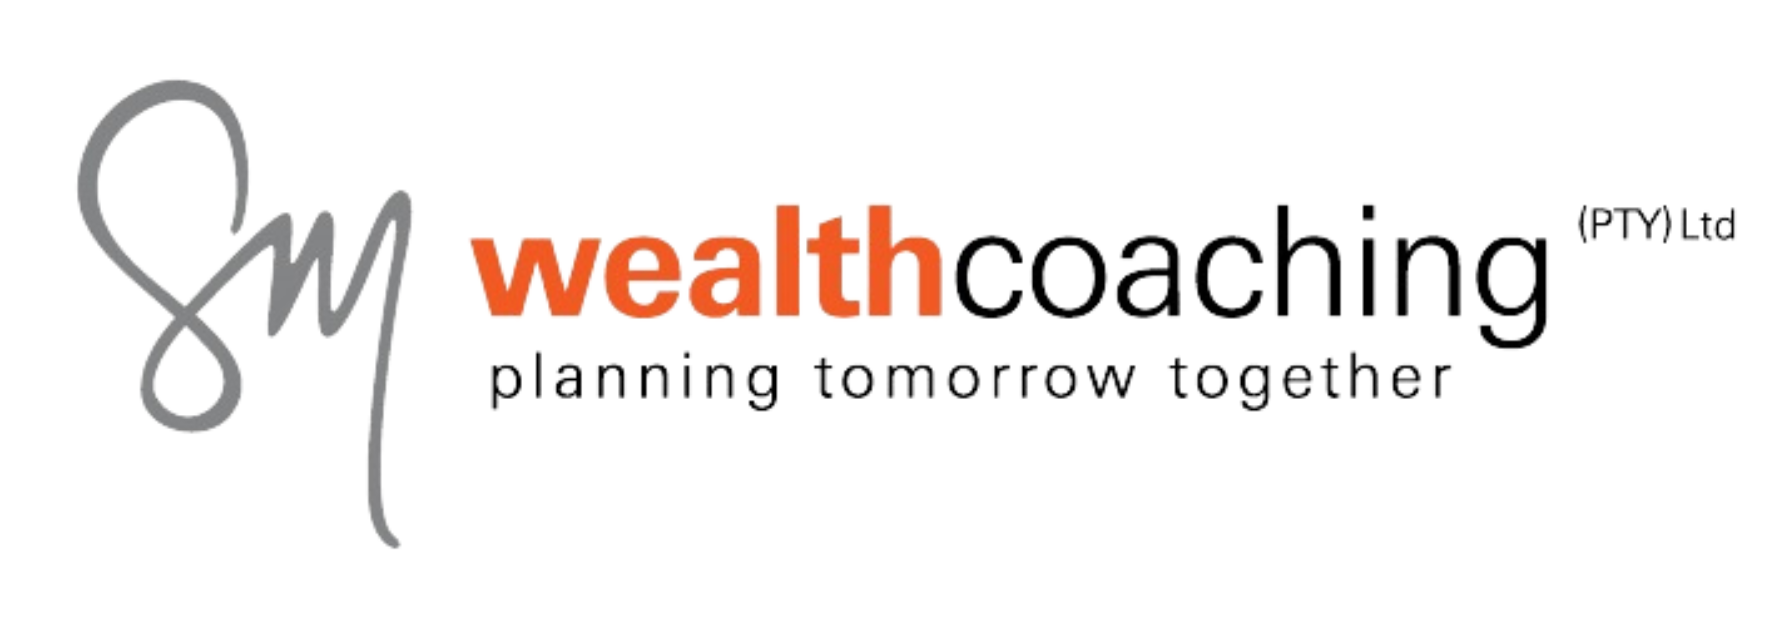 SM Wealth Coaching Logo (Transparent)